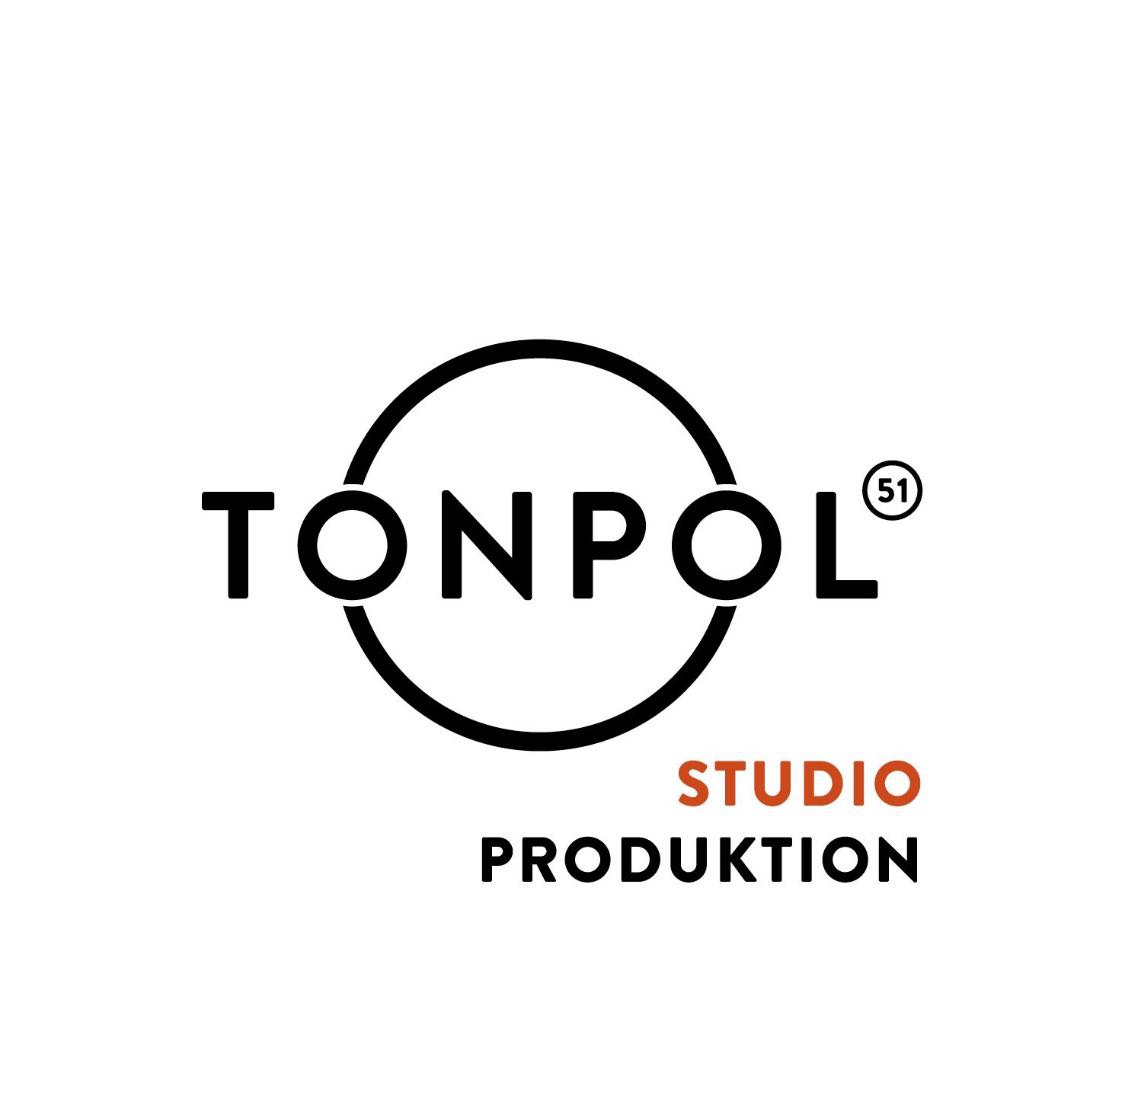 Tonpol Studio 51